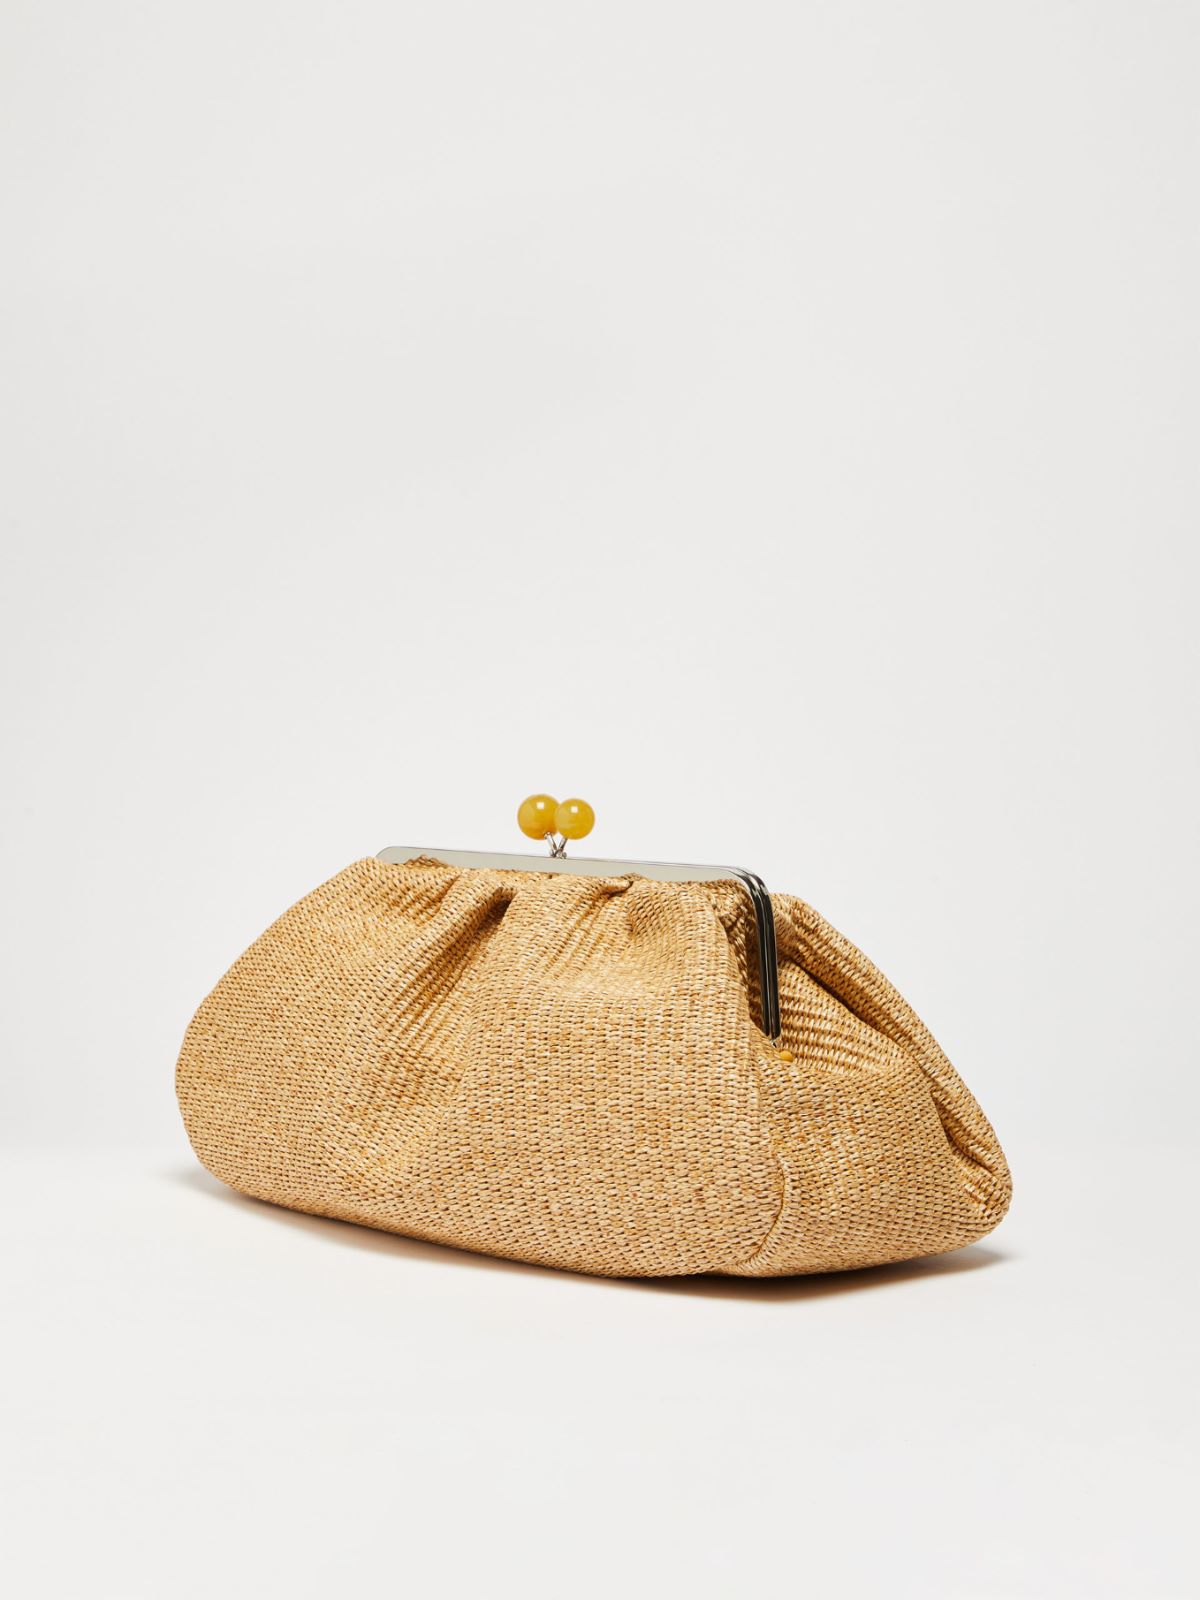 Large Pasticcino Bag in raffia - NATURAL - Weekend Max Mara - 2